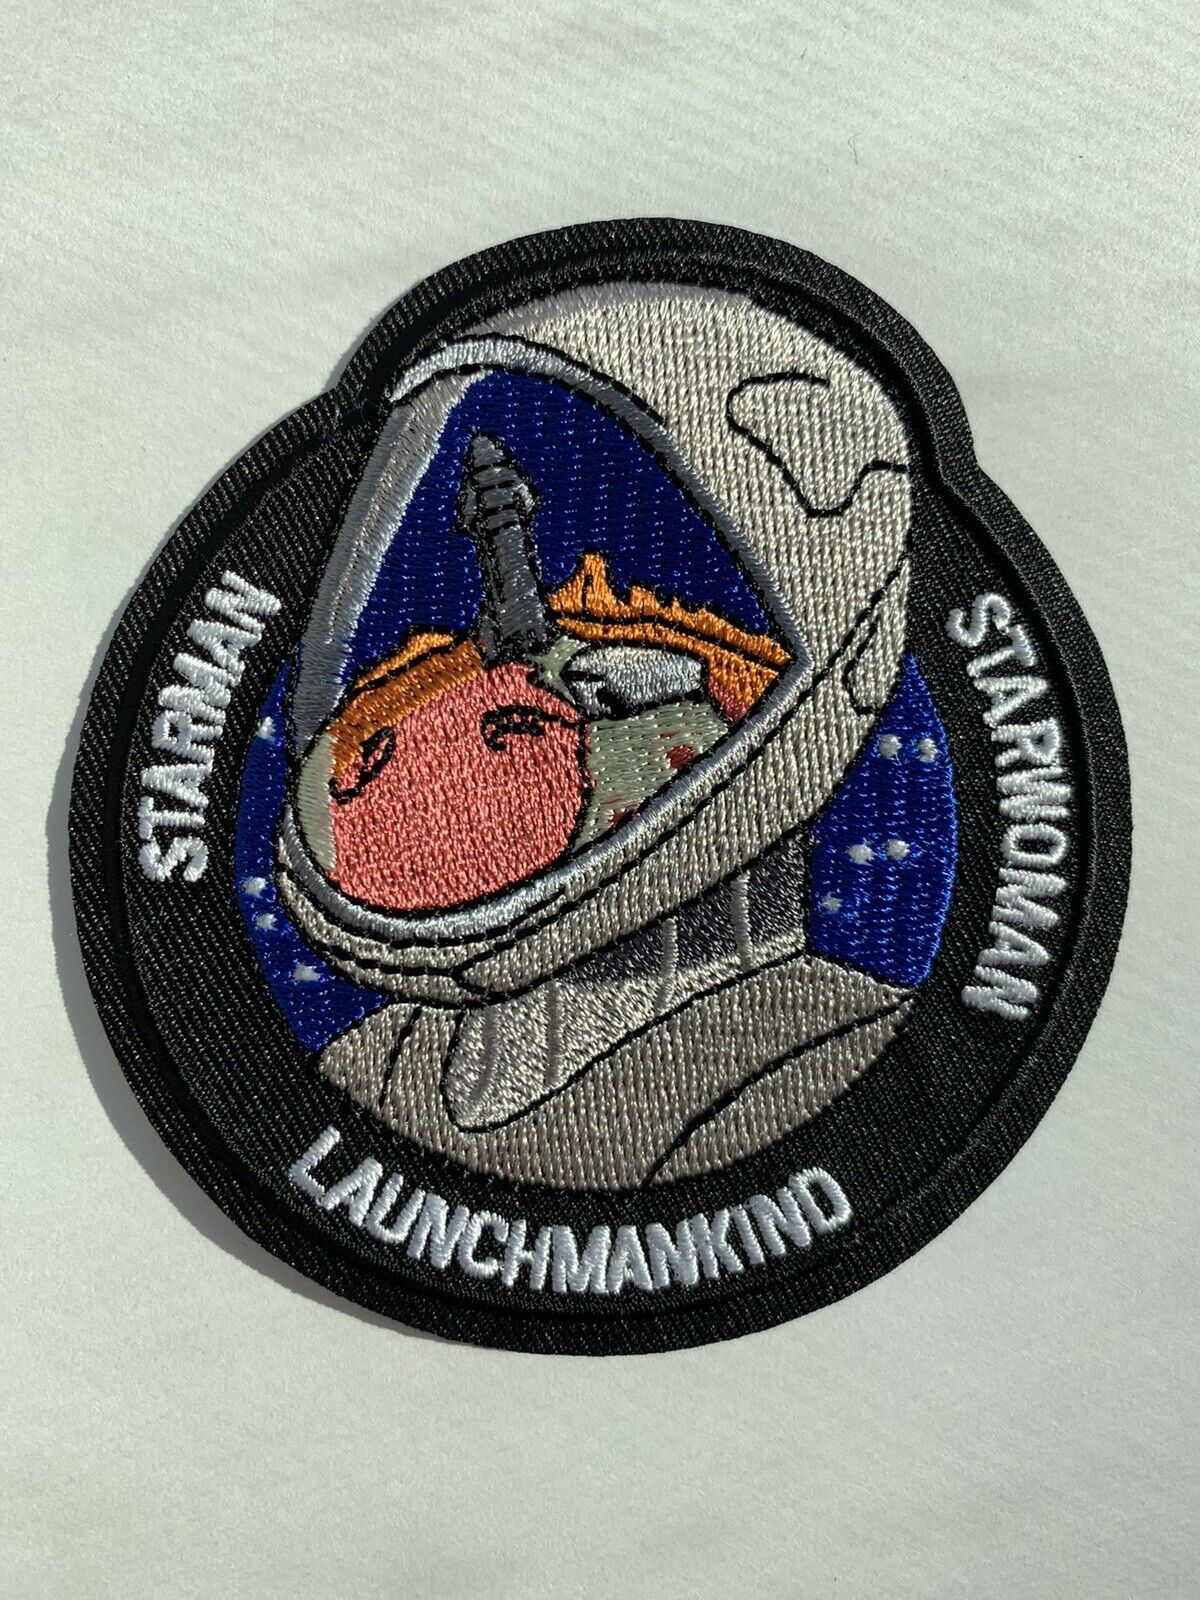 SpaceX Starwoman and Starman To Mars BFR DRAGON NASA 2024 3.5” Mission PATCH